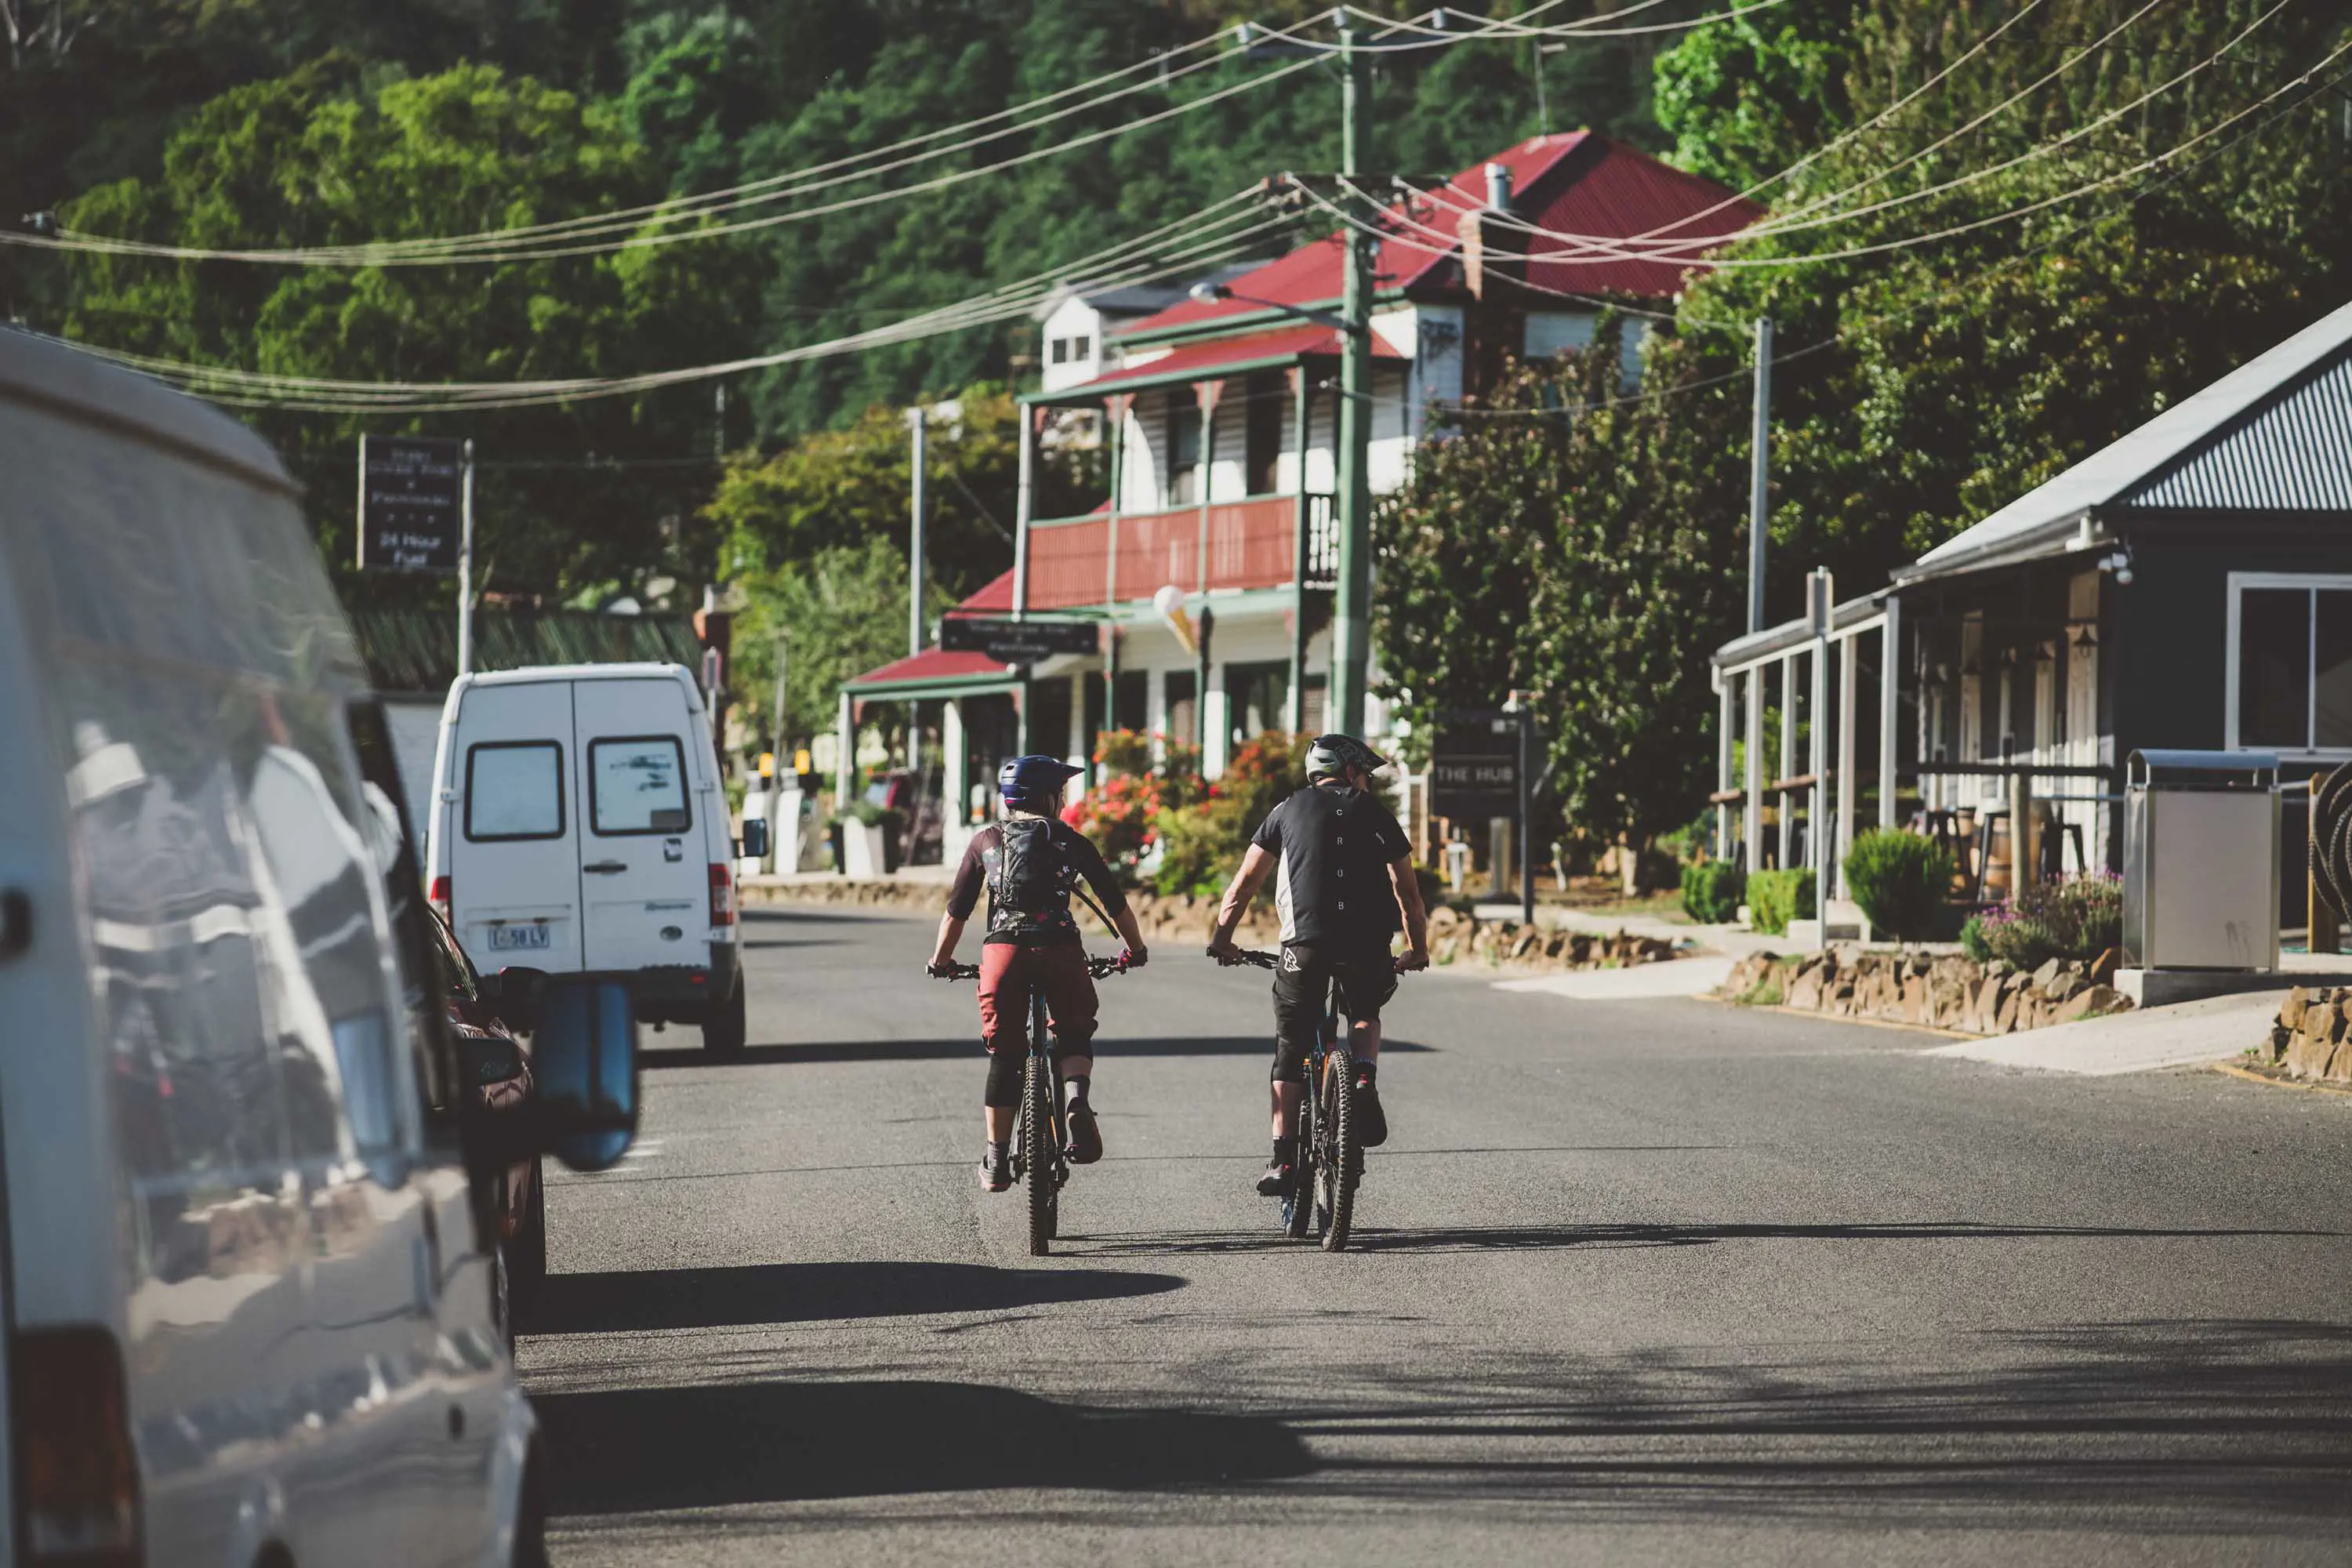 Two mountain bike riders ride their bikes along bitumen throuhg a  country town.